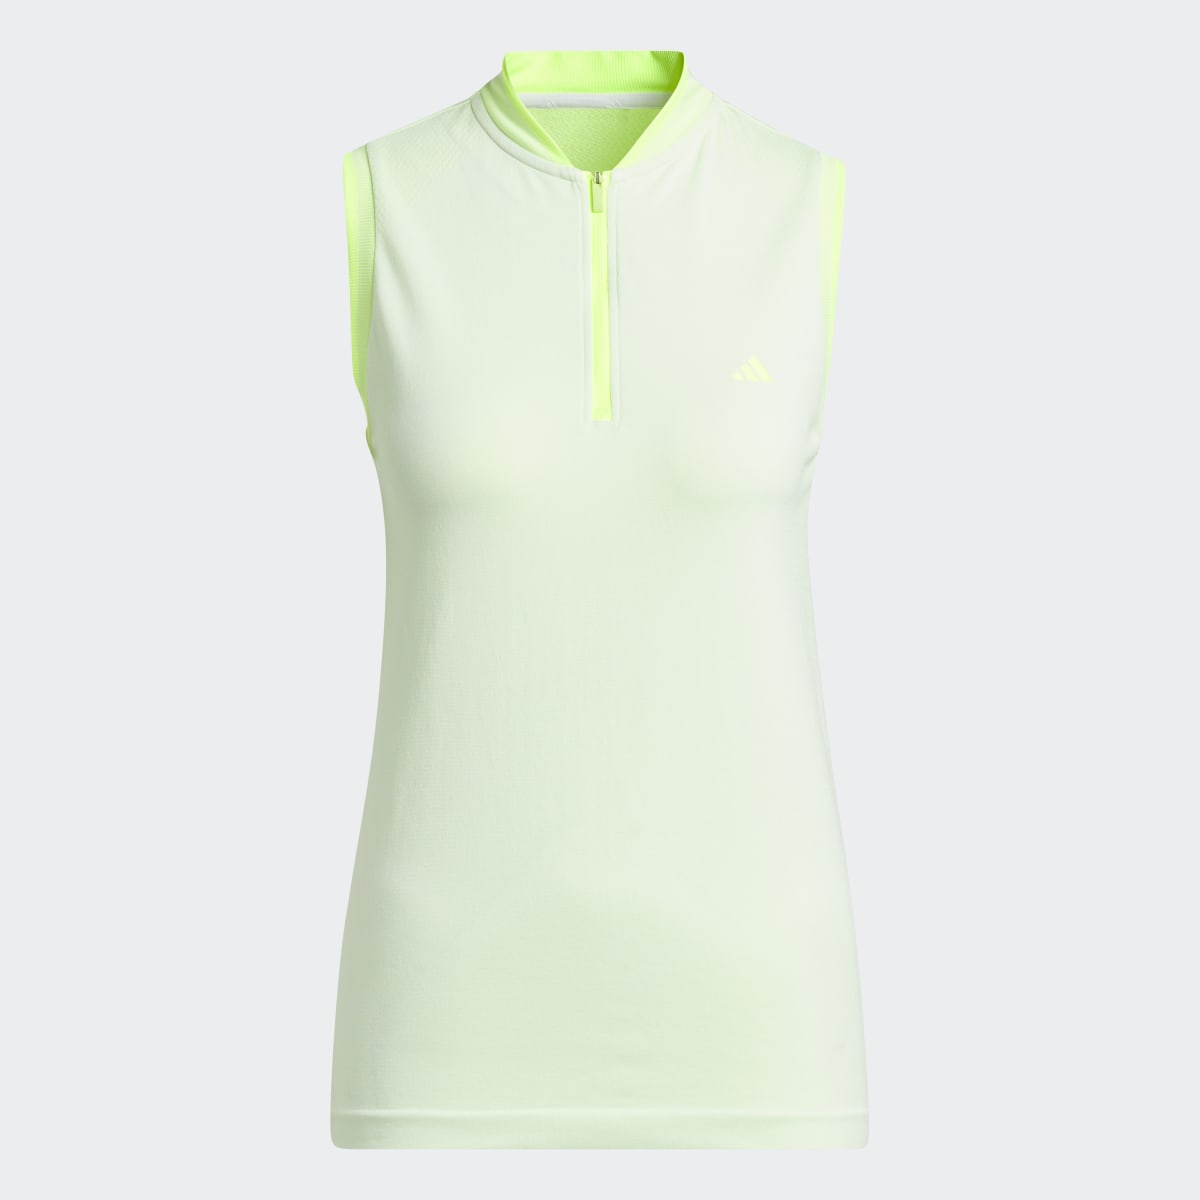 Adidas Ultimate365 Tour PRIMEKNIT Sleeveless Polo Shirt. 5